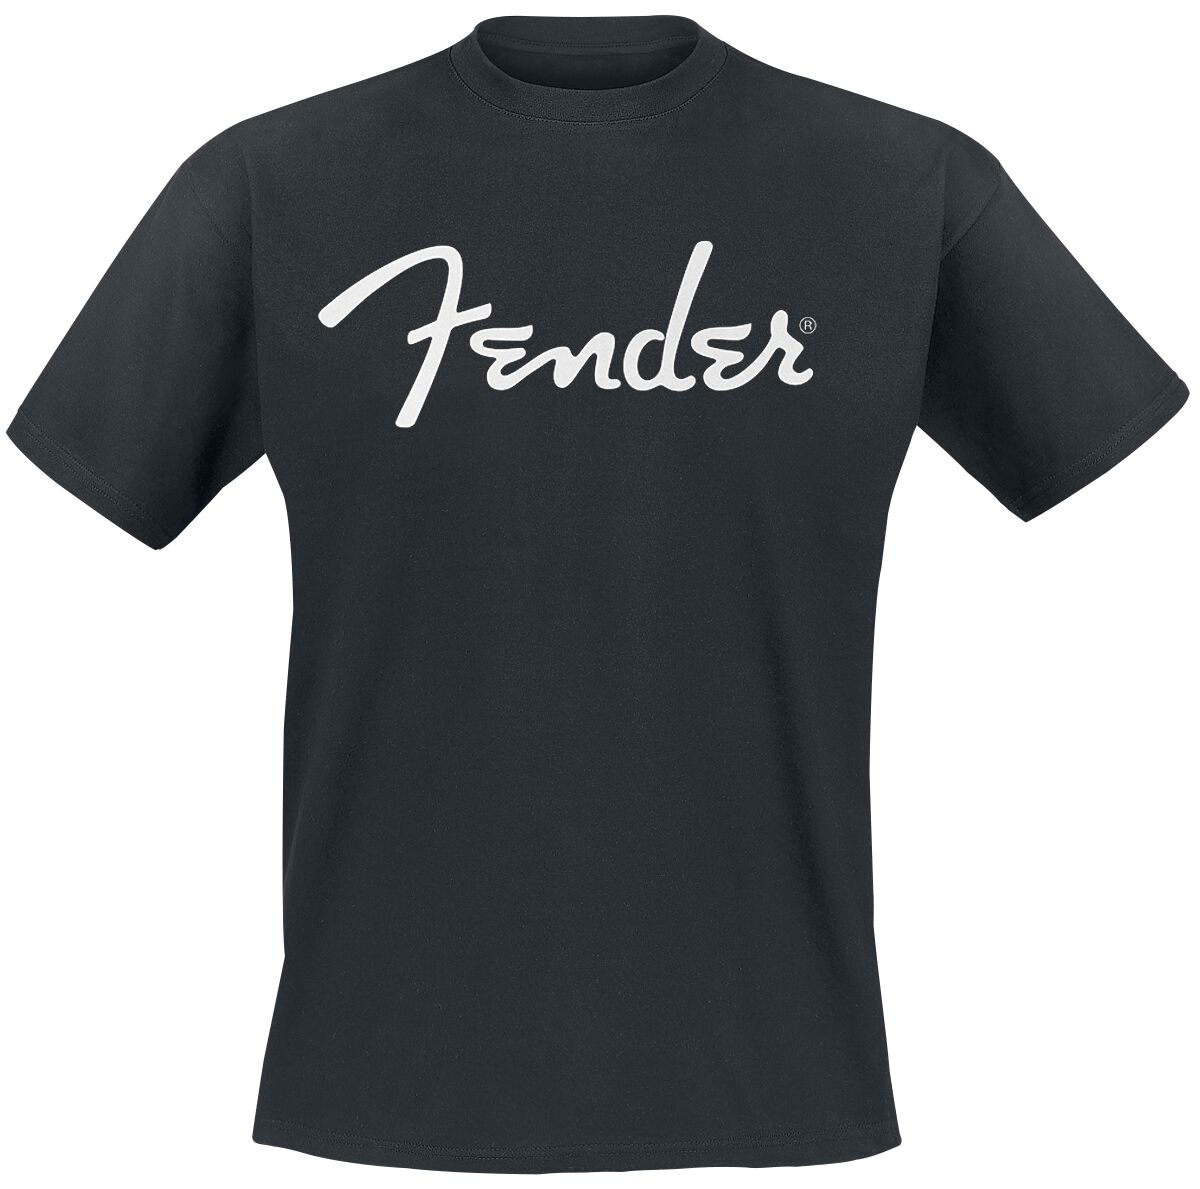 fender t-shirt - classic logo - s bis xxl - fÃ¼r mÃ¤nner - grÃ¶ÃŸe xl - - lizenziertes merchandise! schwarz